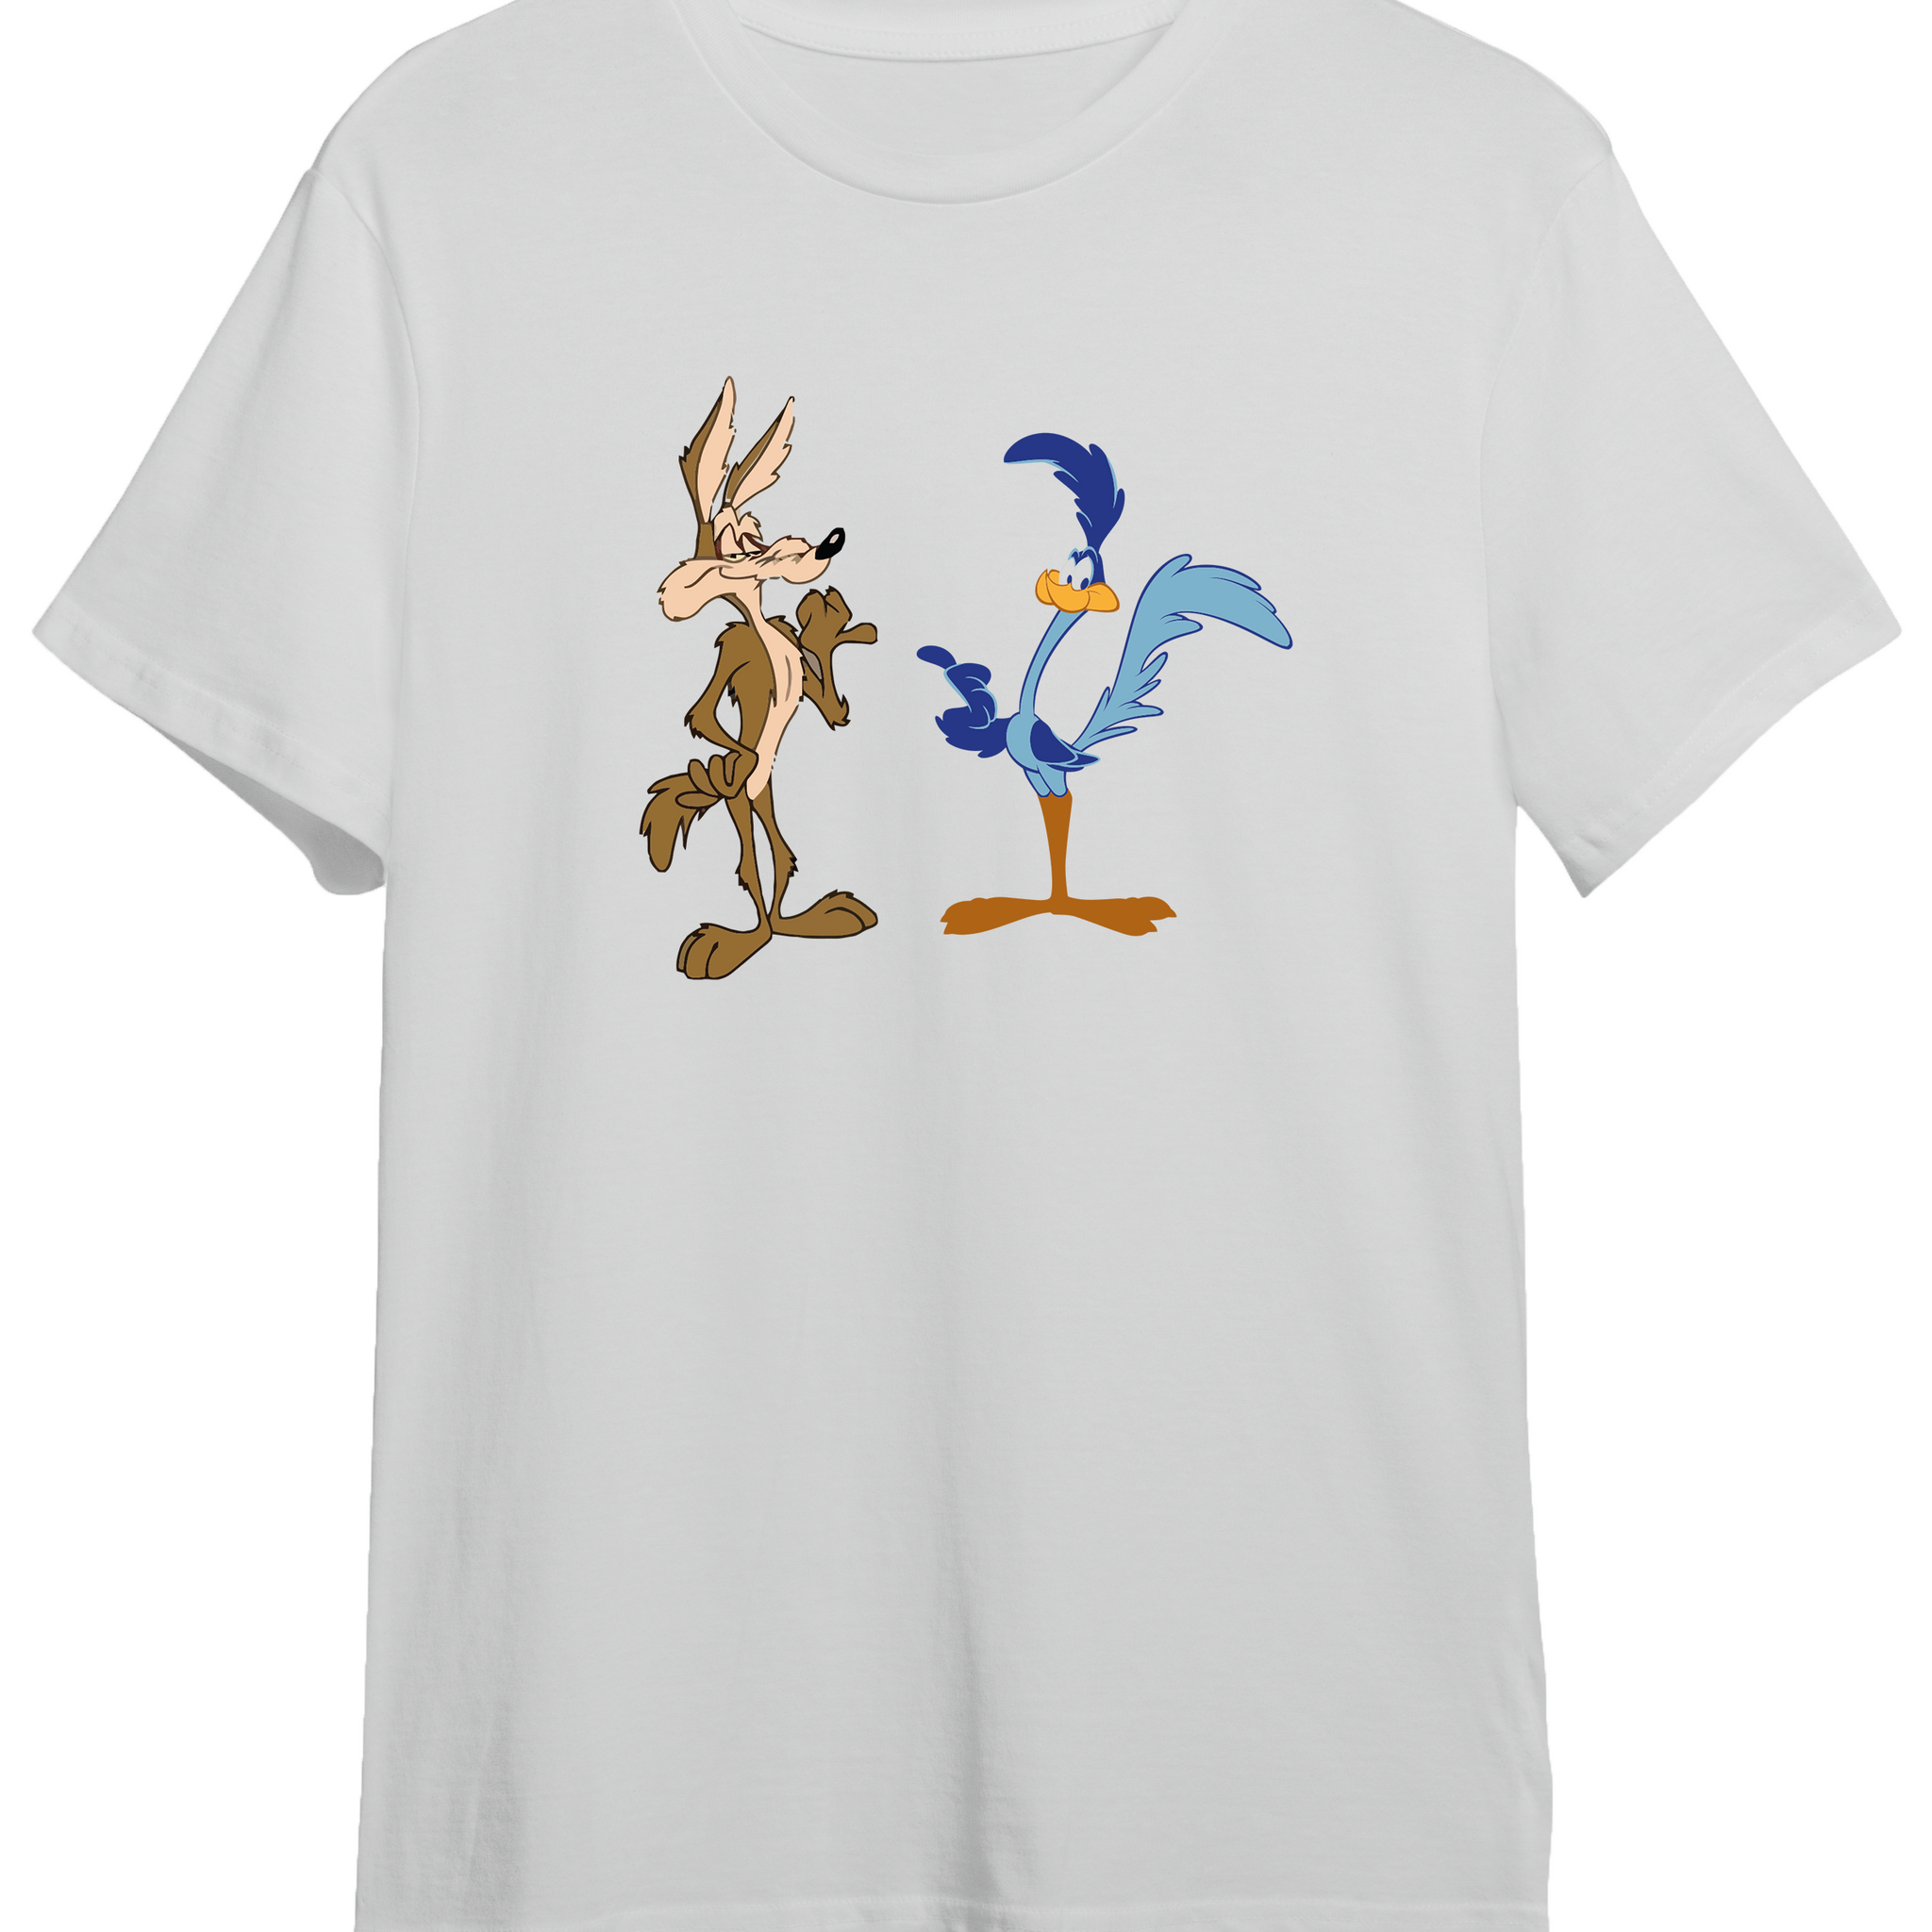 Coyote and Road Runner - Regular Tshirt